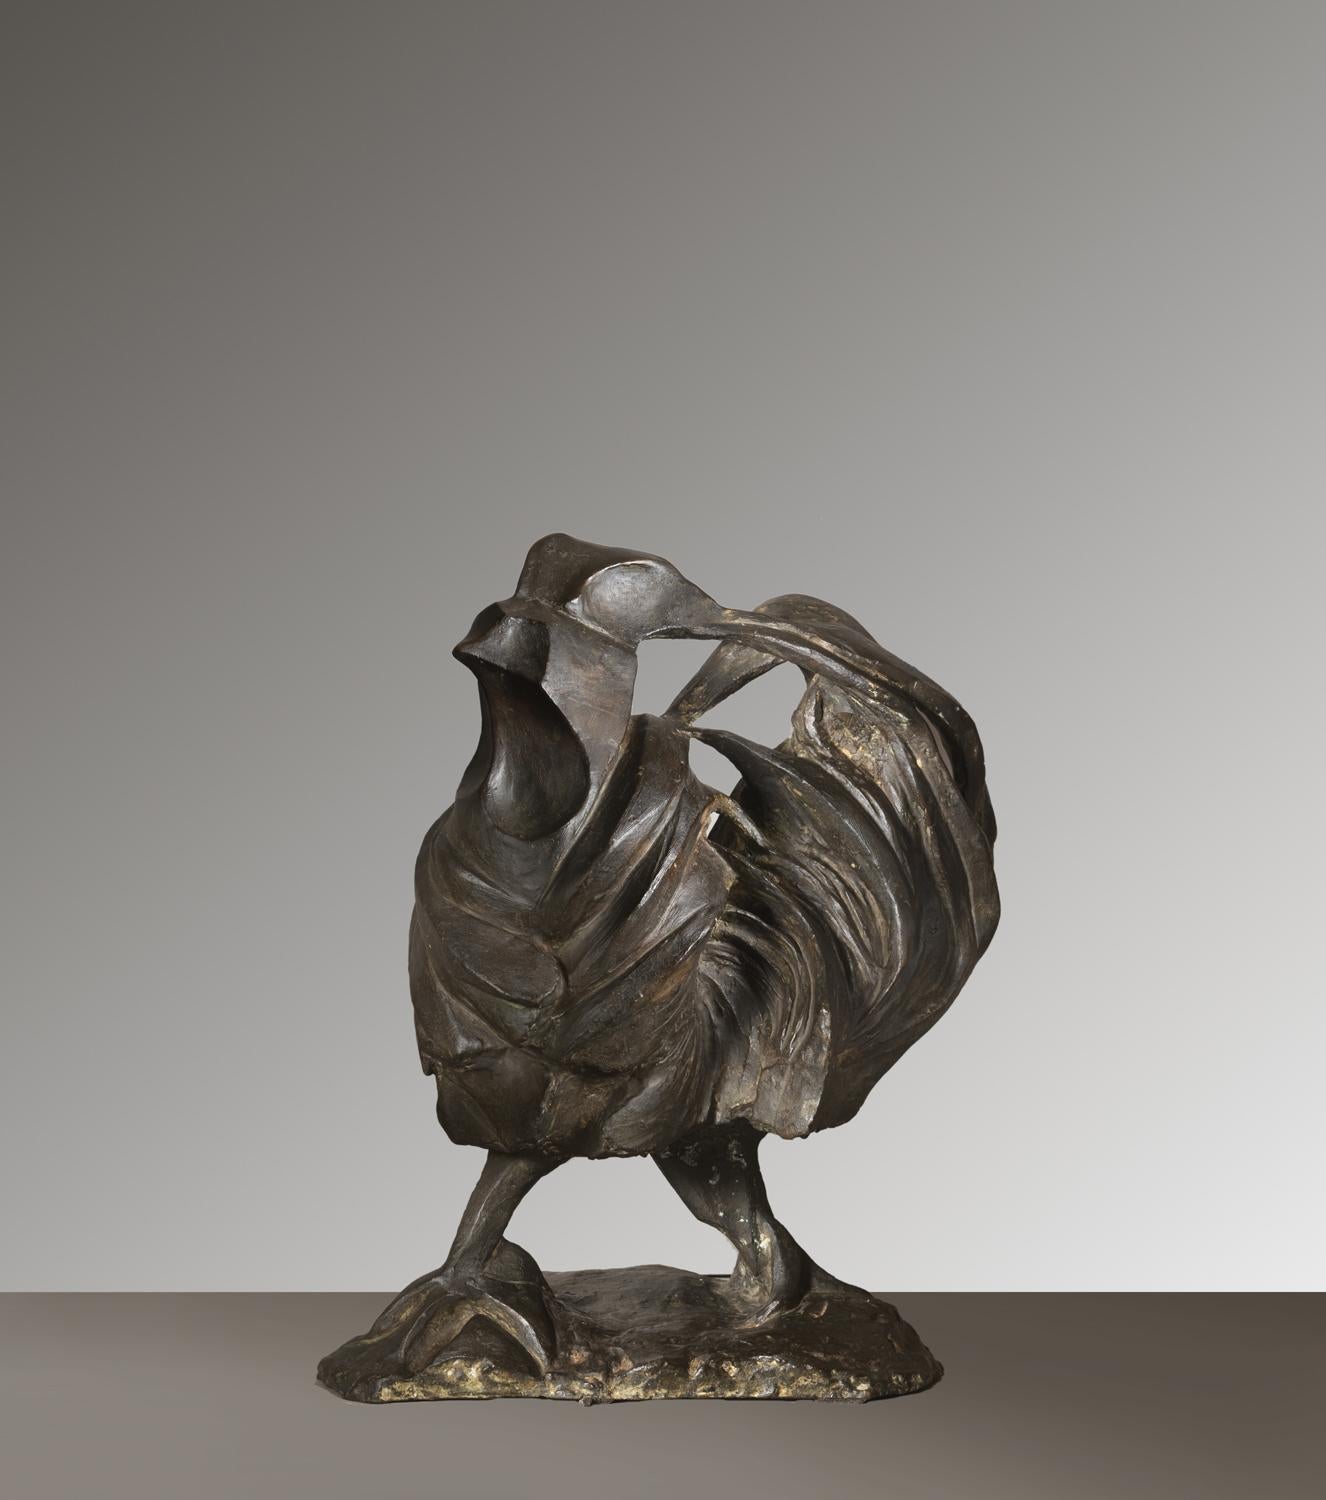 Maria Chiaromonte Figurative Sculpture - Futurist abstract figurative bronze sculpture with animal theme